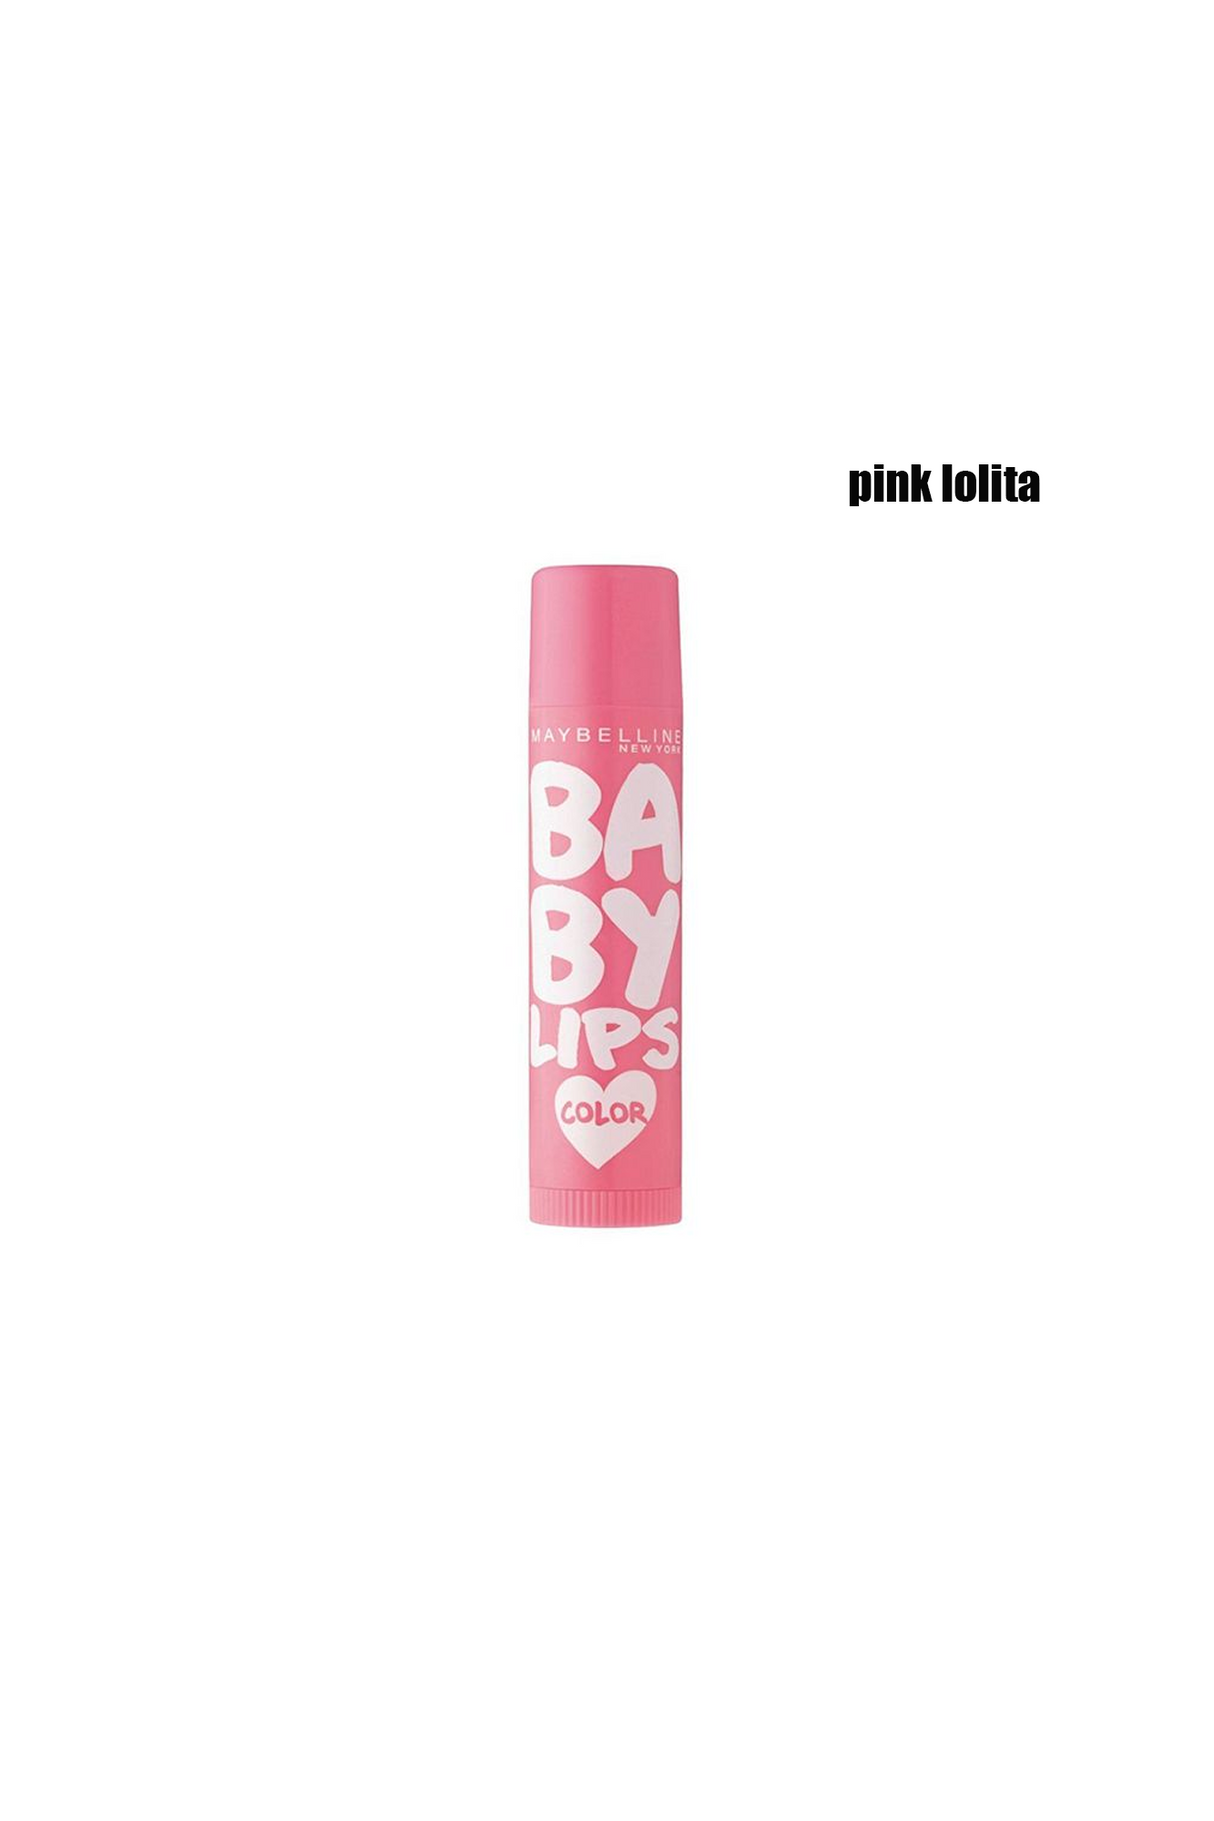 maybelline lip balm baby lips pink lolita 4g